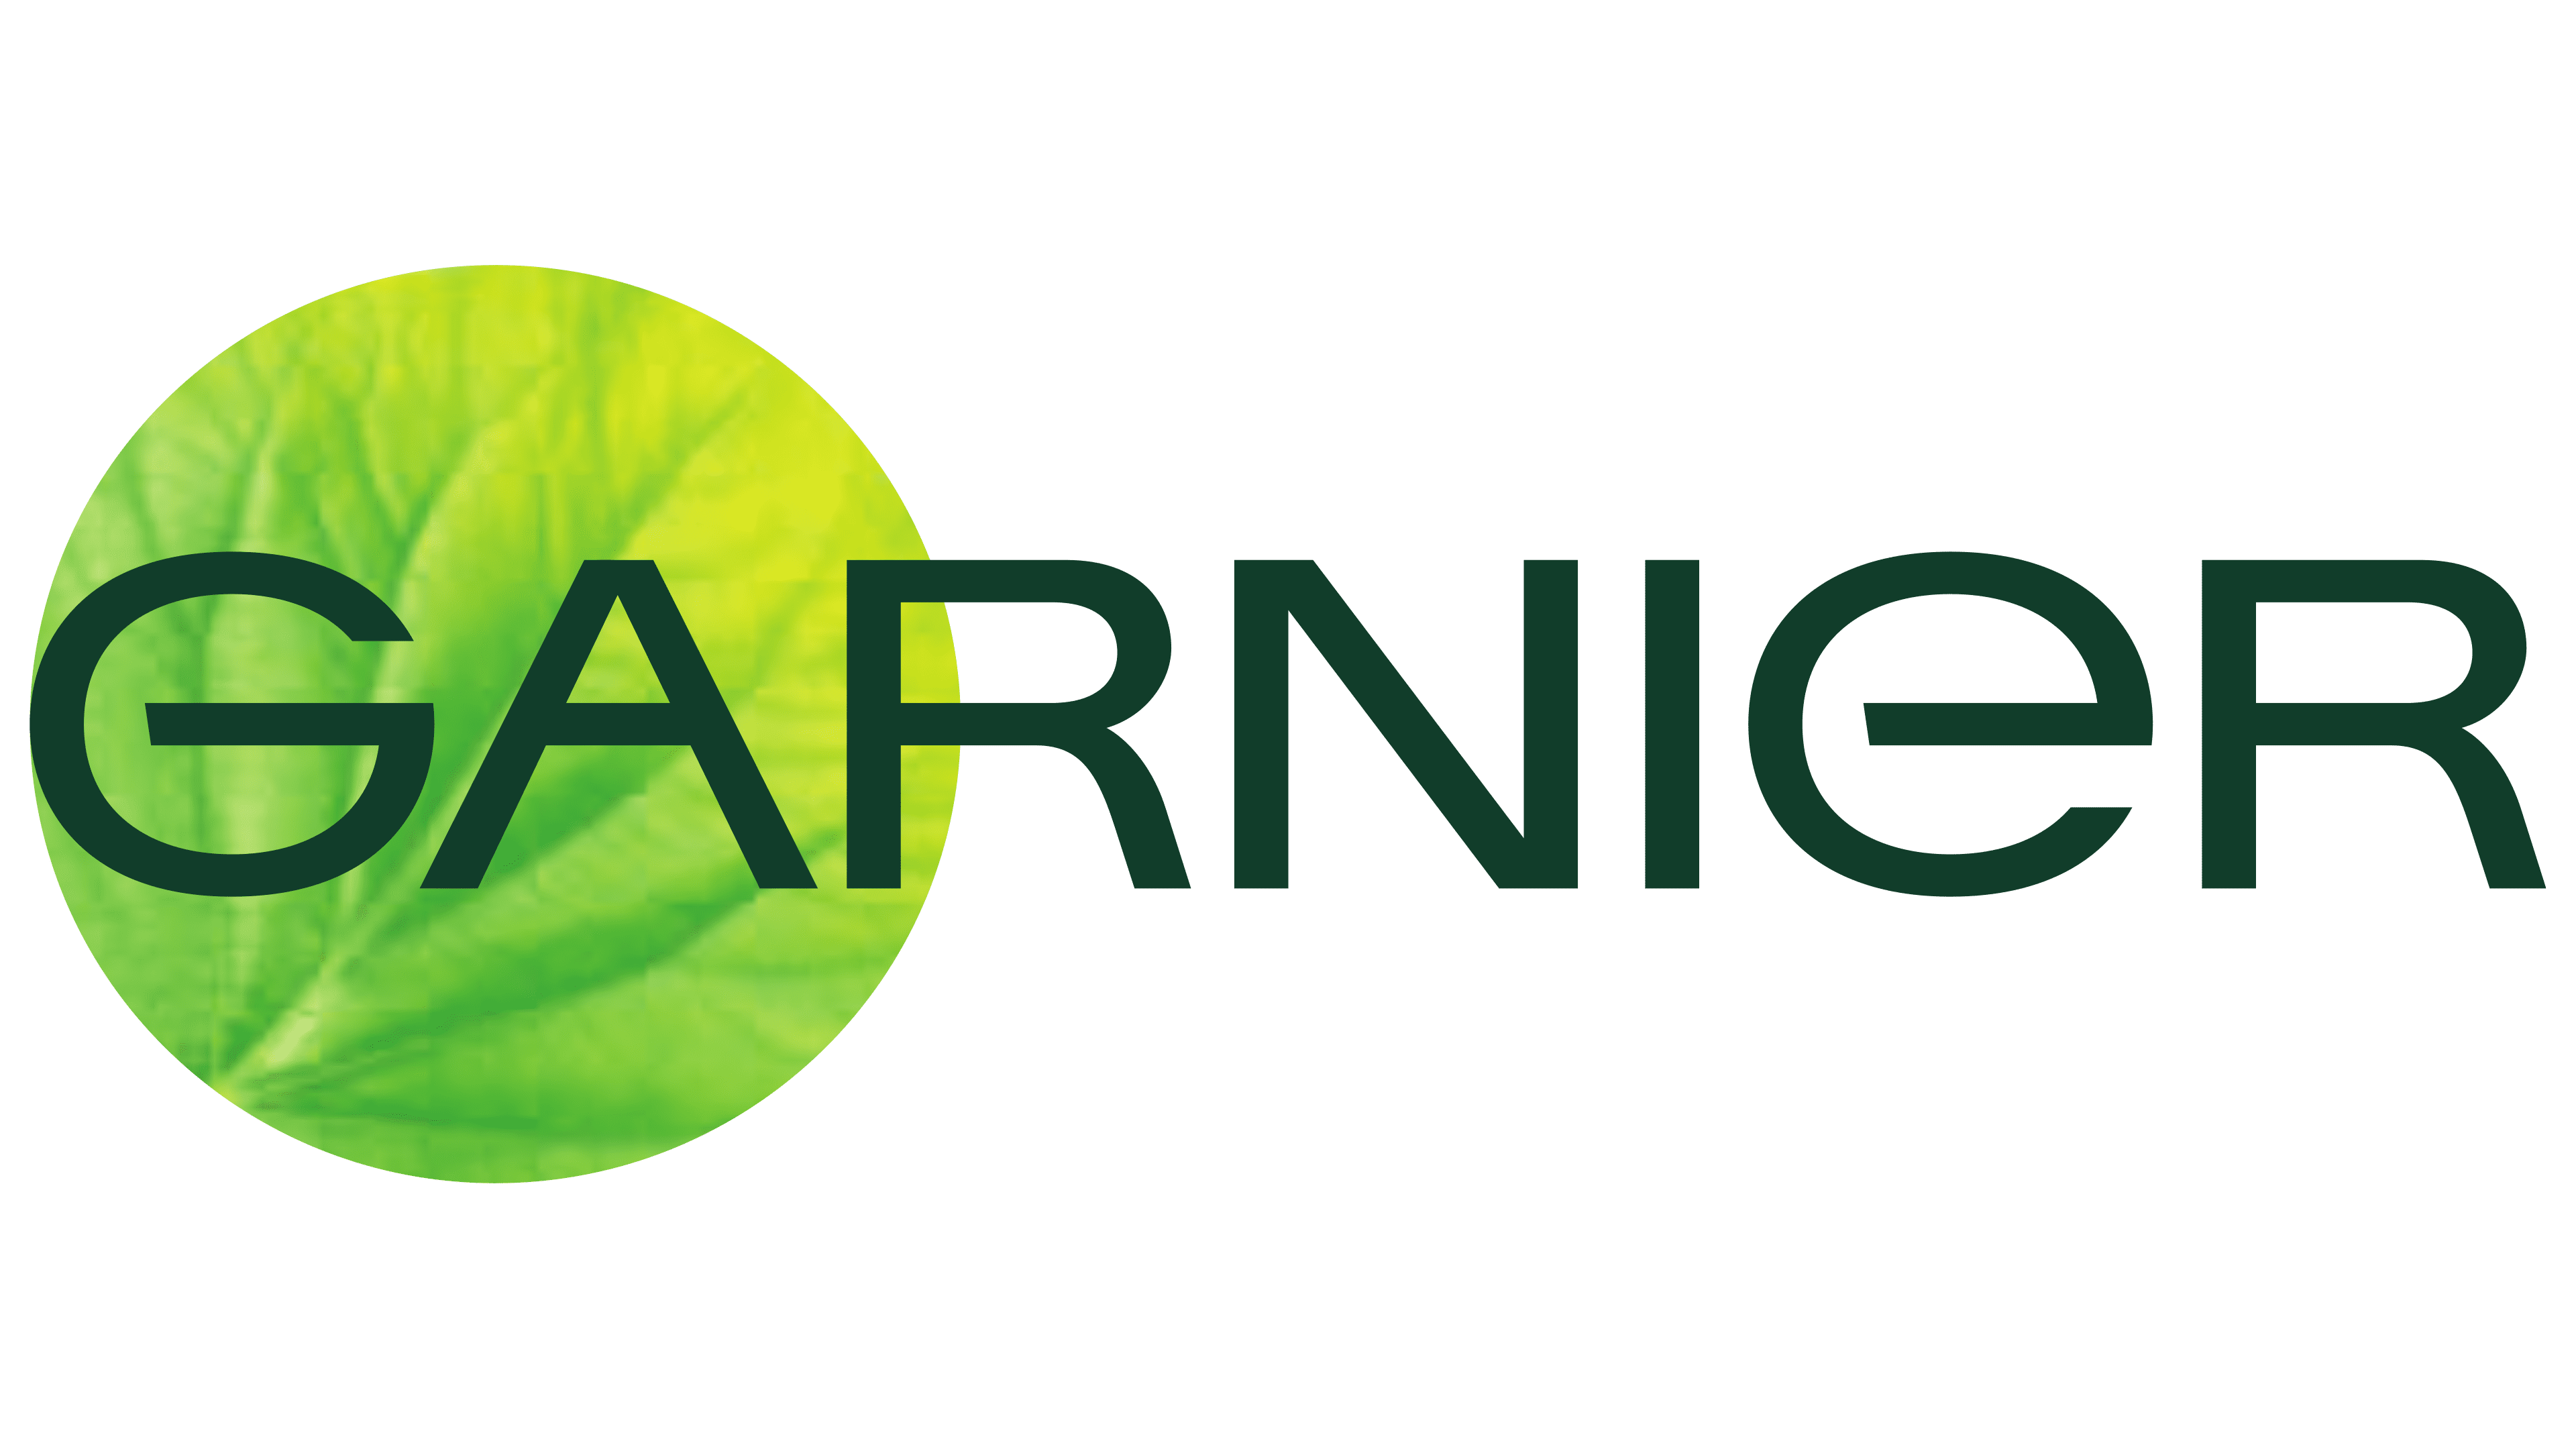 Garnier-Logo